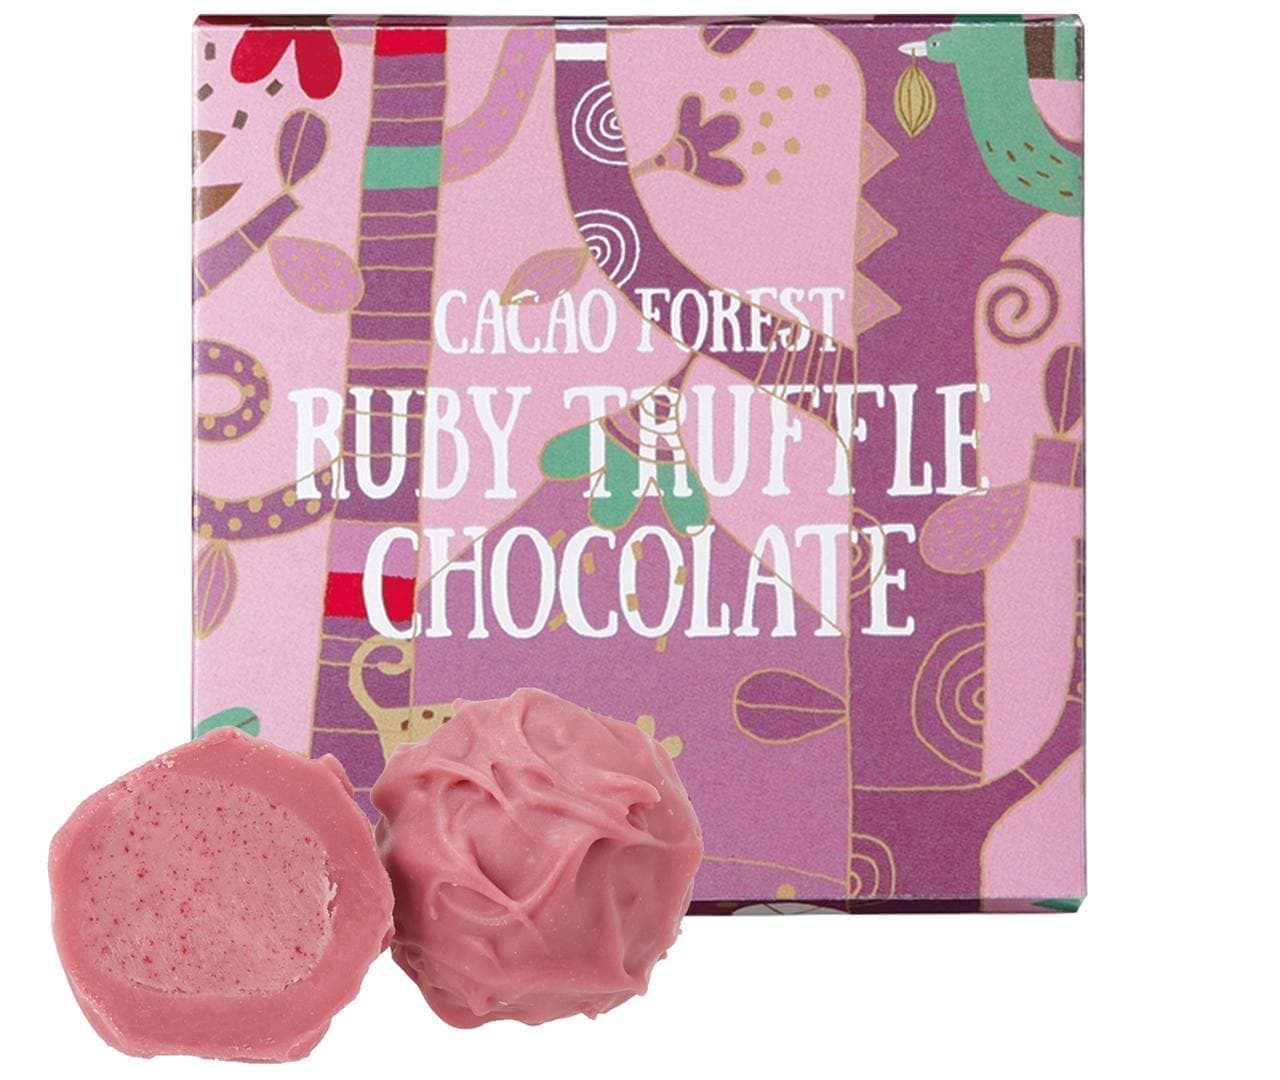 KALDI "Cacao Forest Ruby Truffle Chocolate"